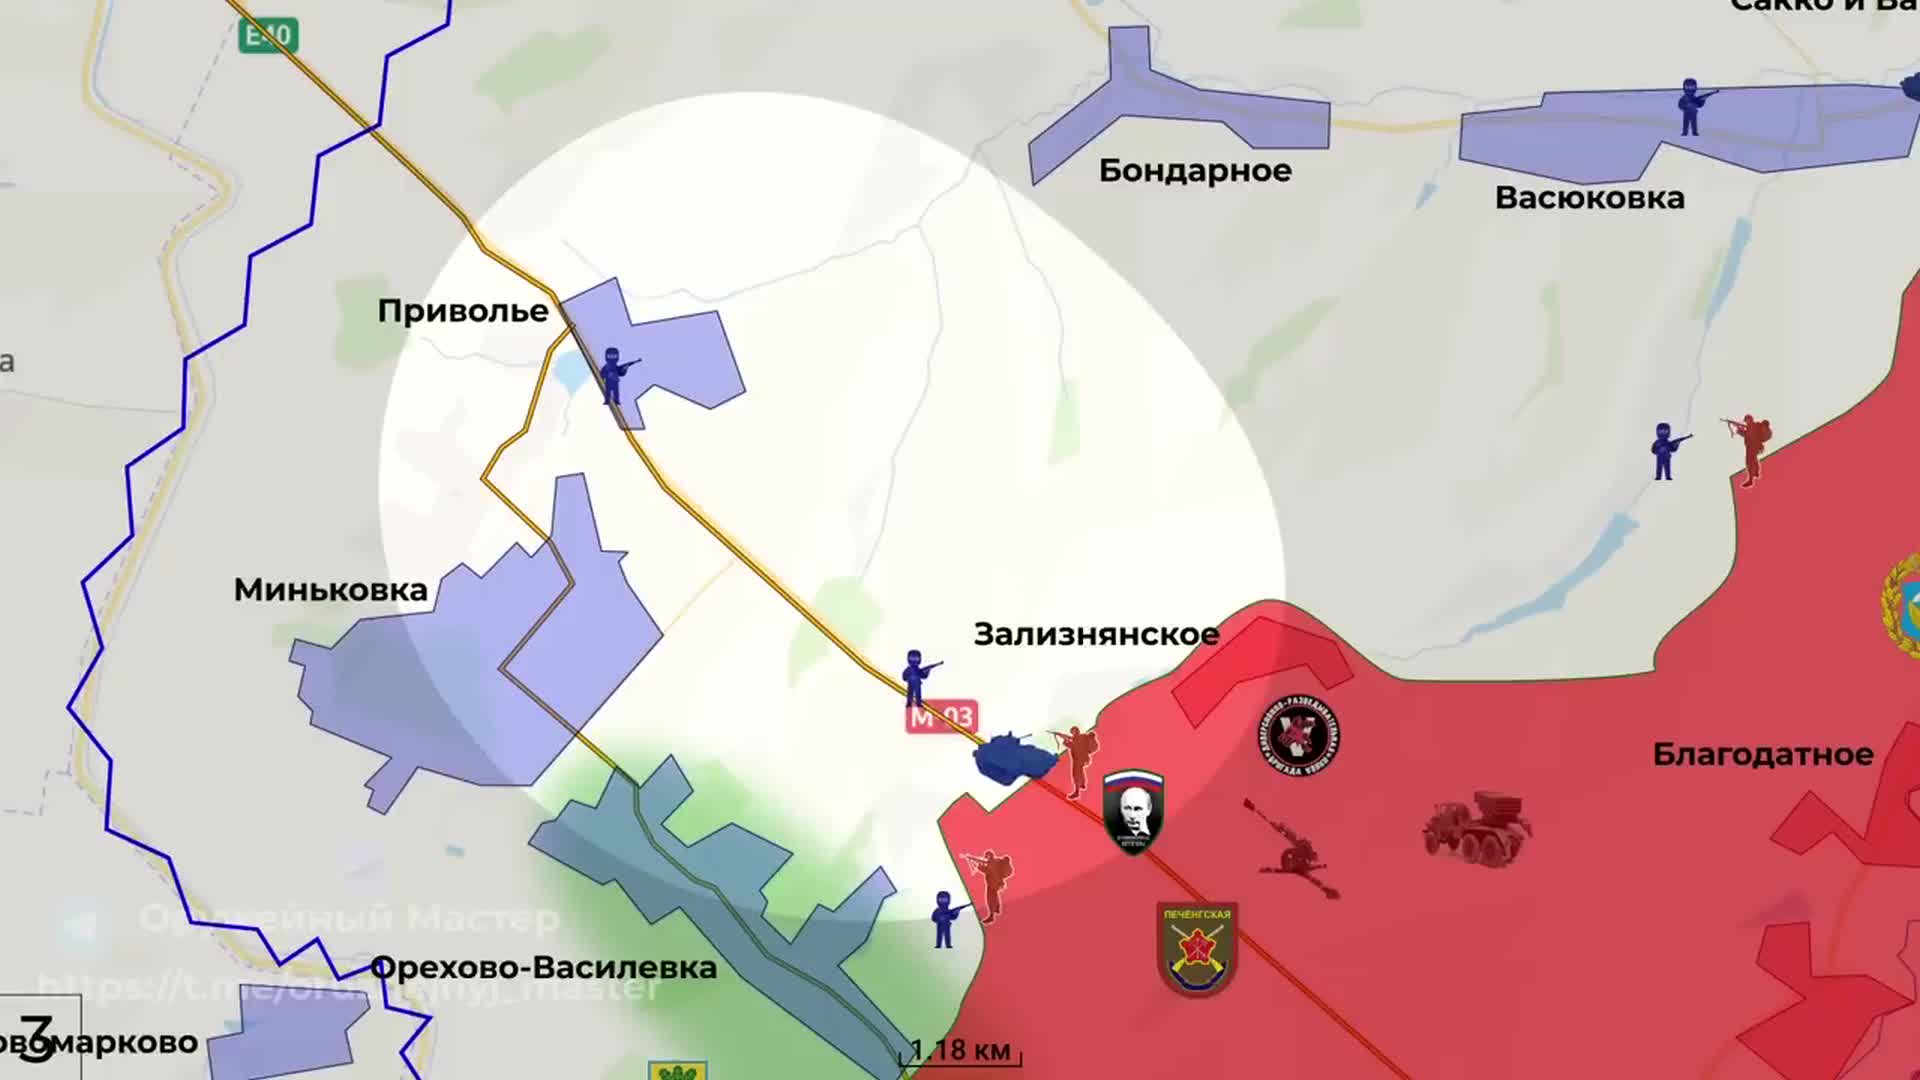 Новости работино сегодня карта. Работино на карте боевых. Синьковка Харьковская область на карте боевых действий. Работино Украина.